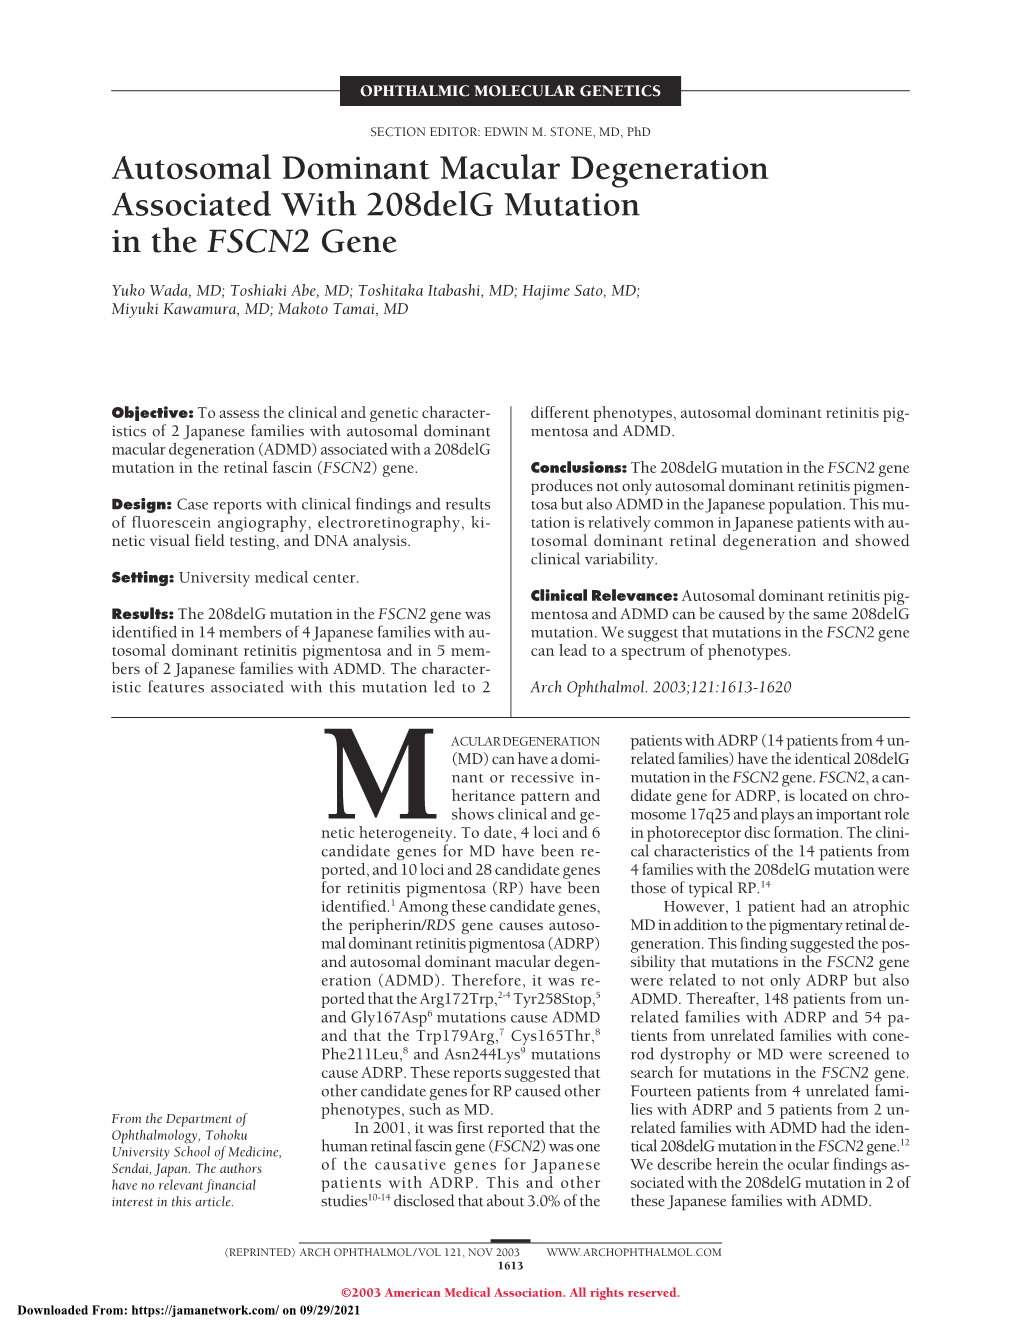 Autosomal Dominant Macular Degeneration Associated with 208Delg Mutation in the FSCN2 Gene